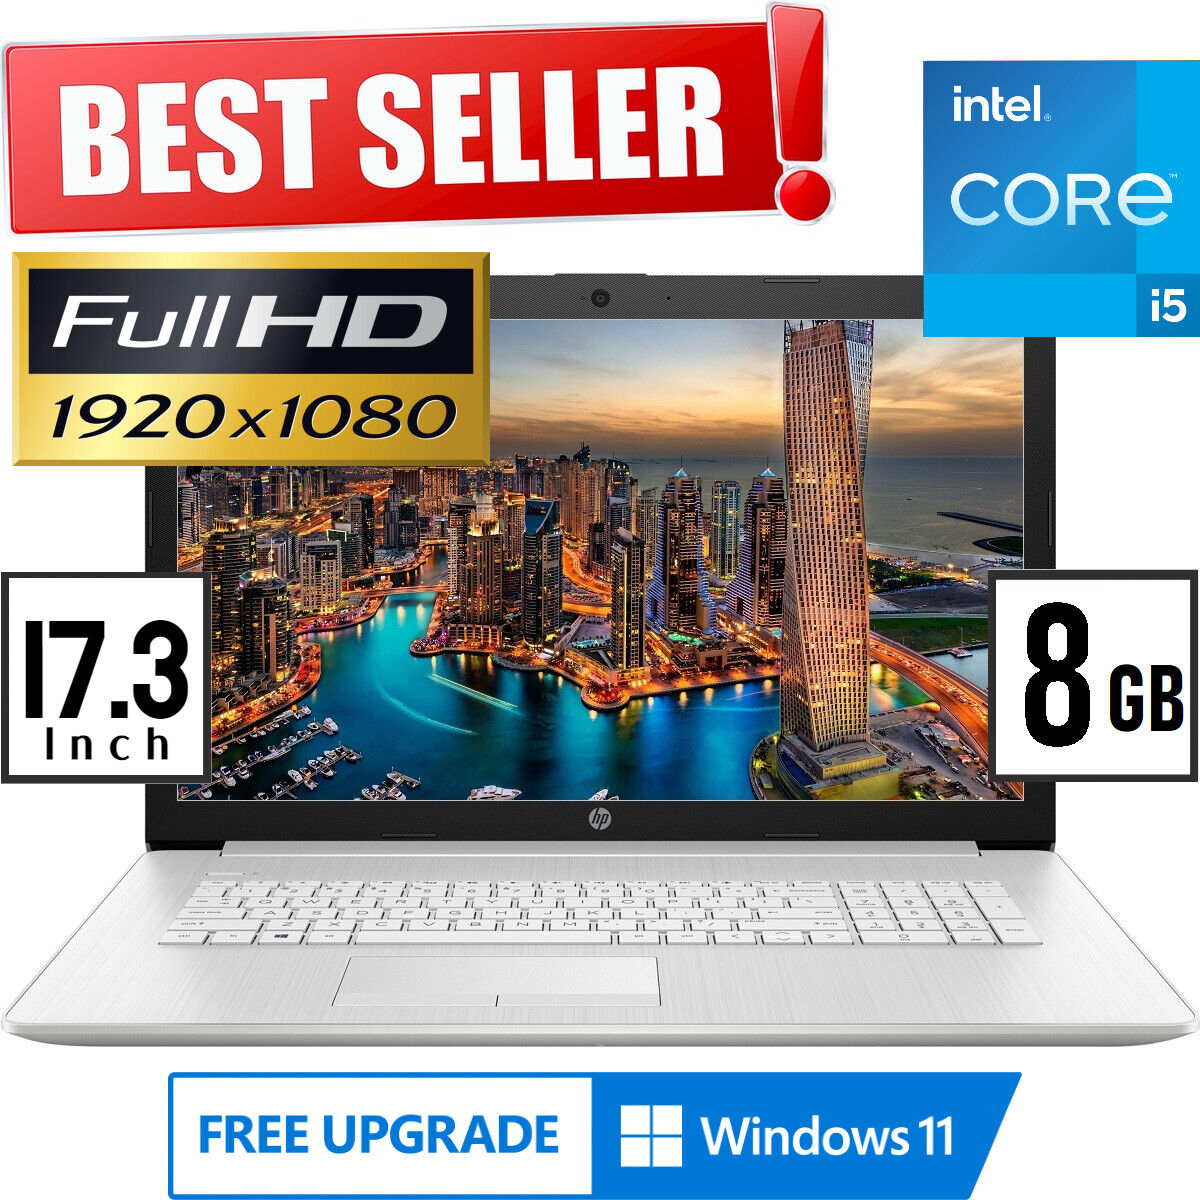 HP 17.3" Full-HD Laptop 11th Gen. Intel Core i5-1135G7 4.20GHz 8GB Ram 256GB SSD